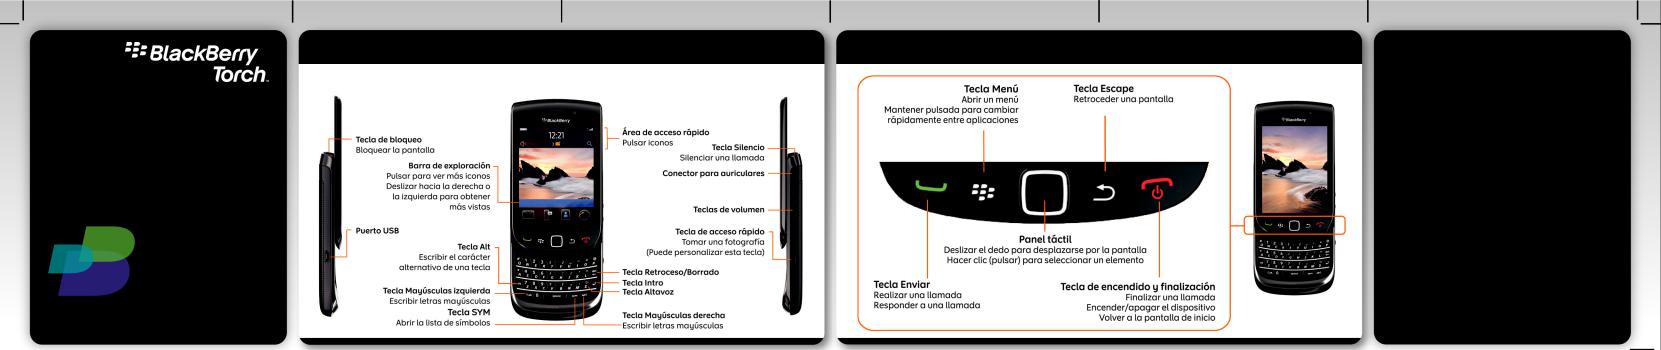 BlackBerry Torch 9800 User Manual